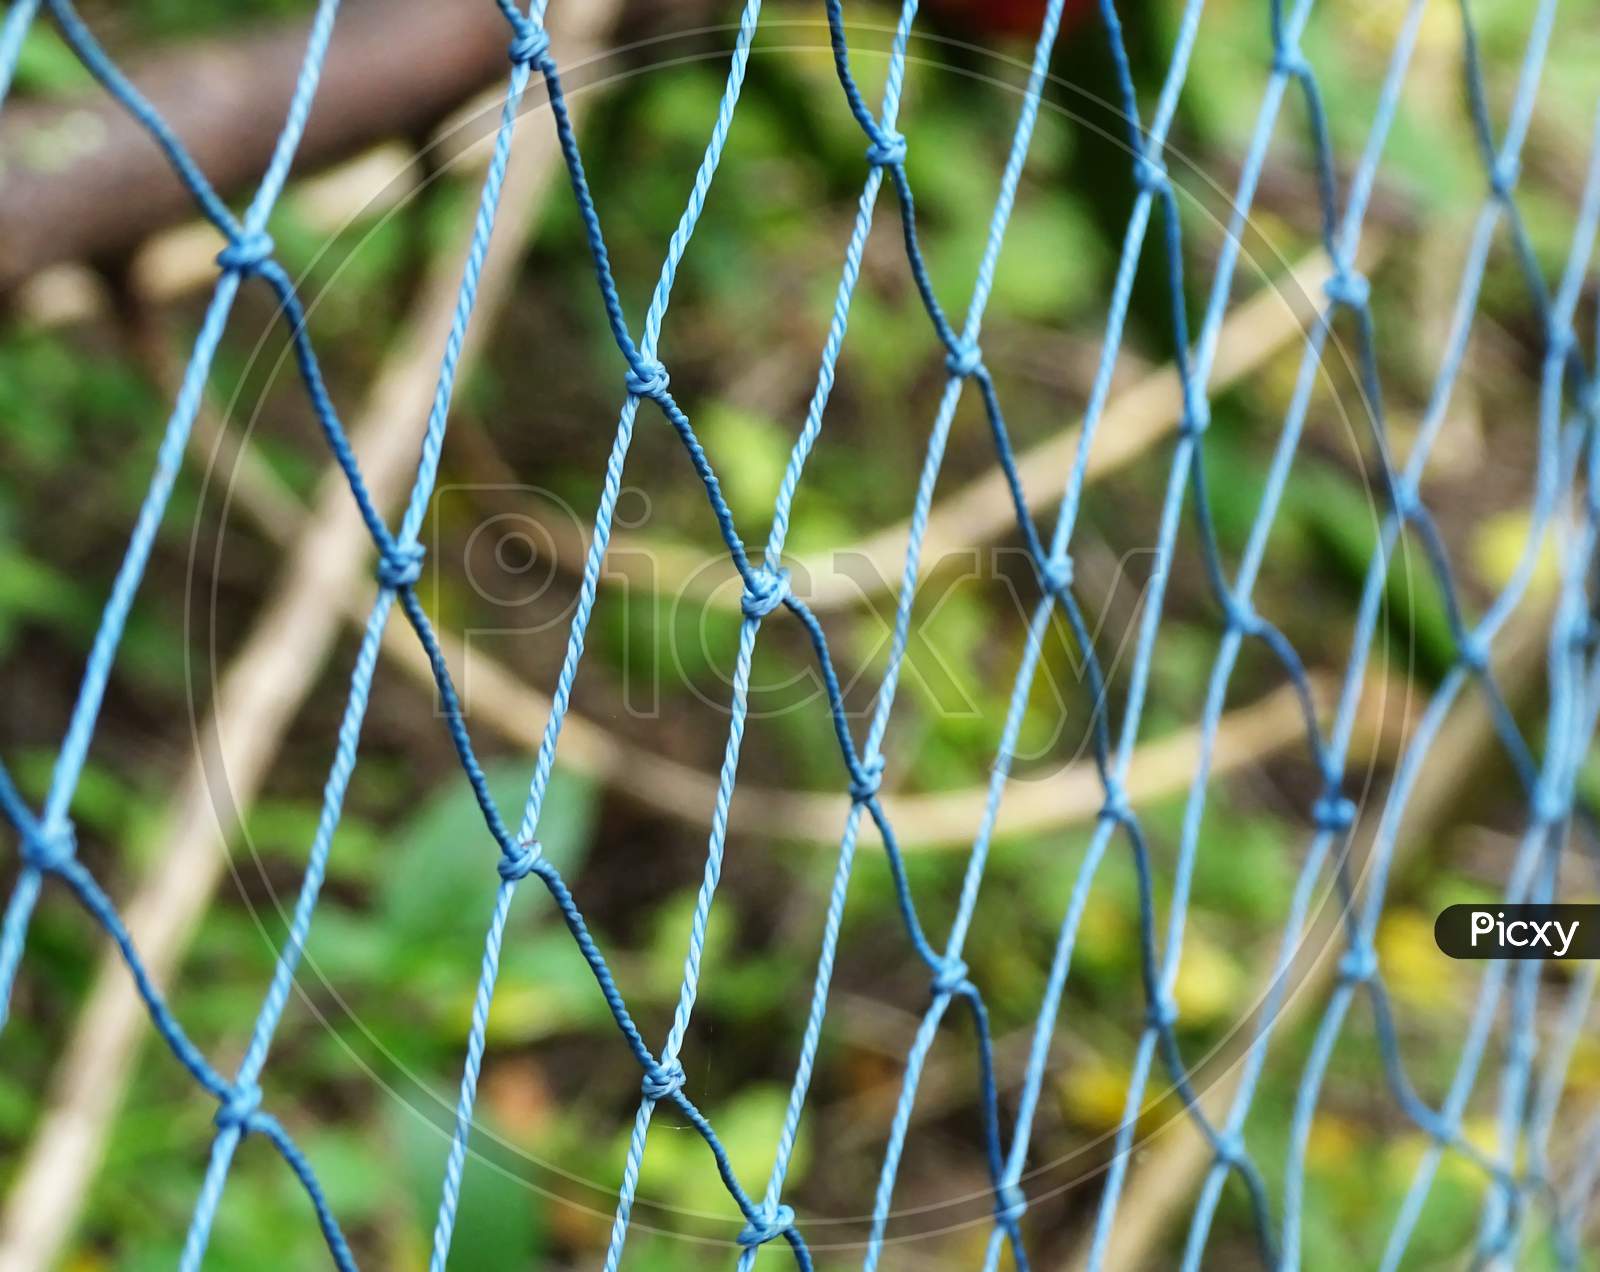 Net garden, background blur, selective focus on subject